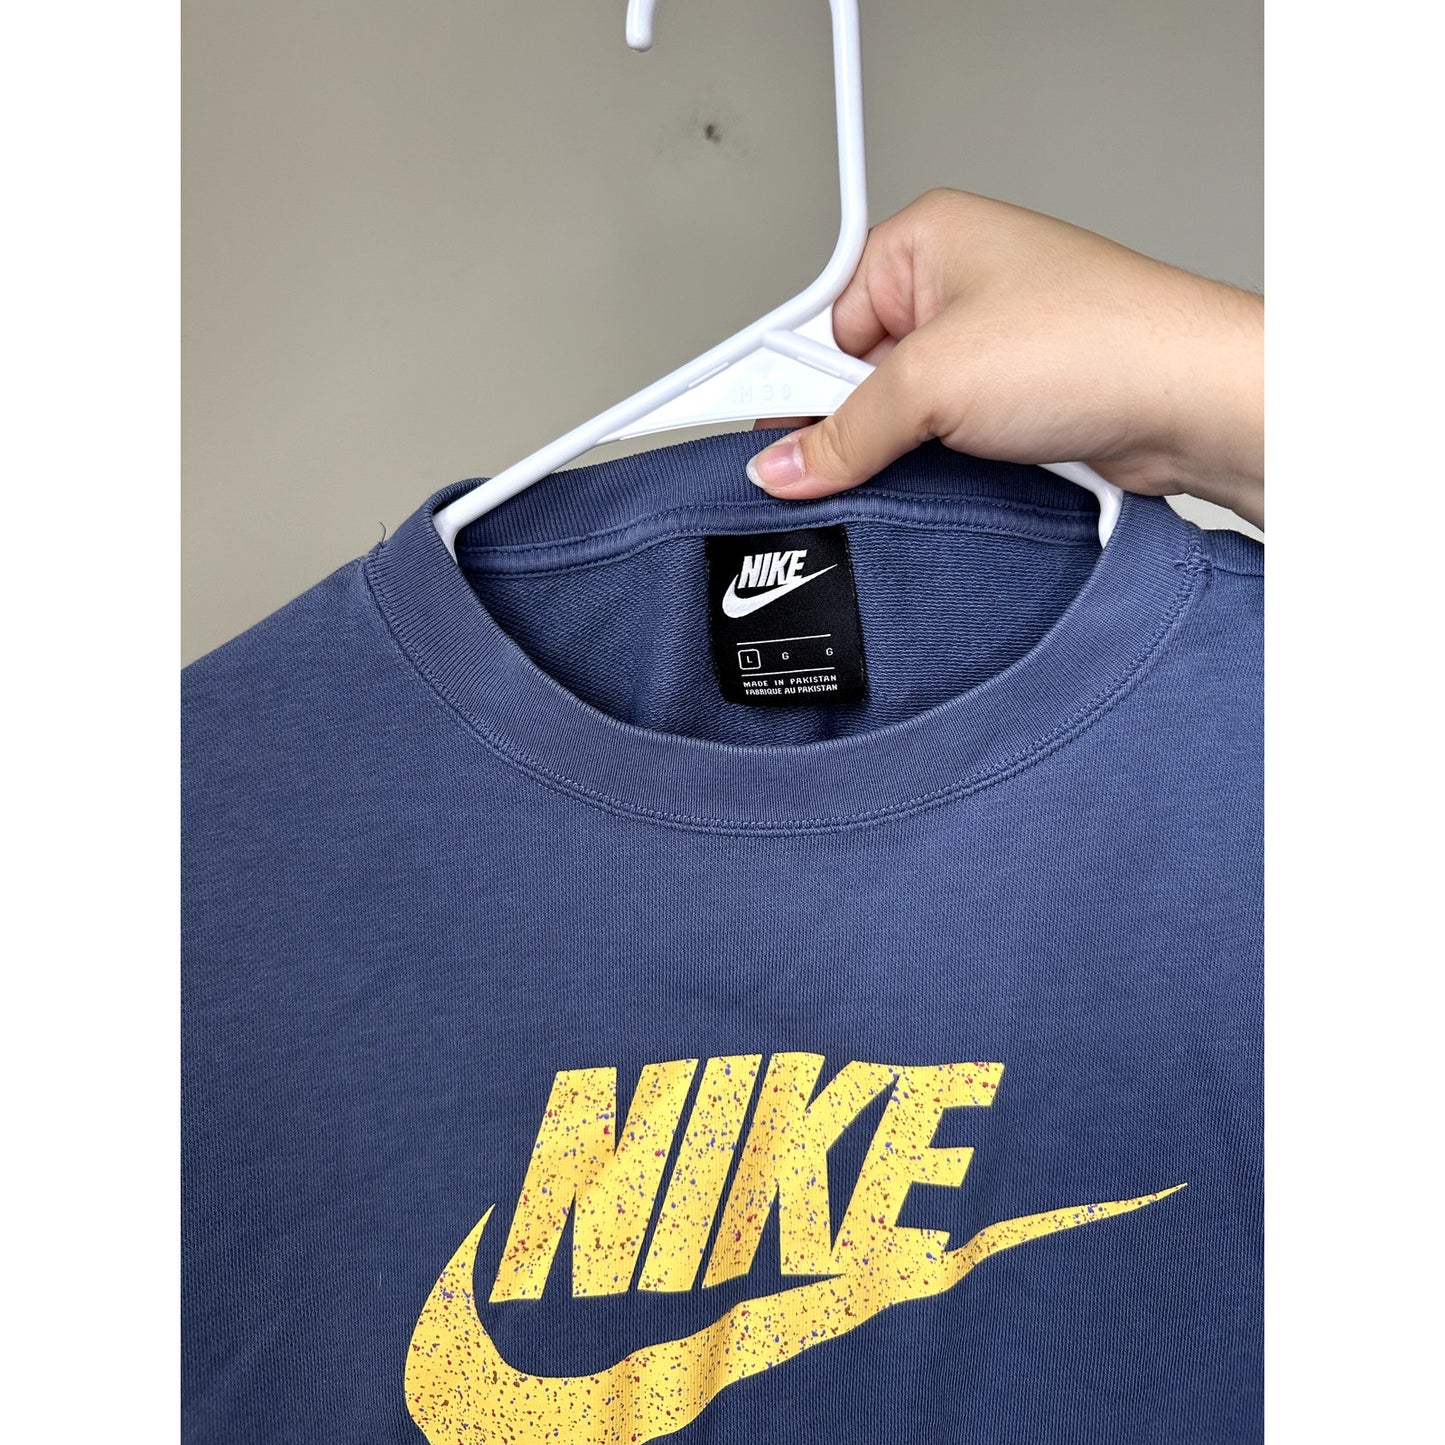 Nike Short Sleeve T-shirt, Size L